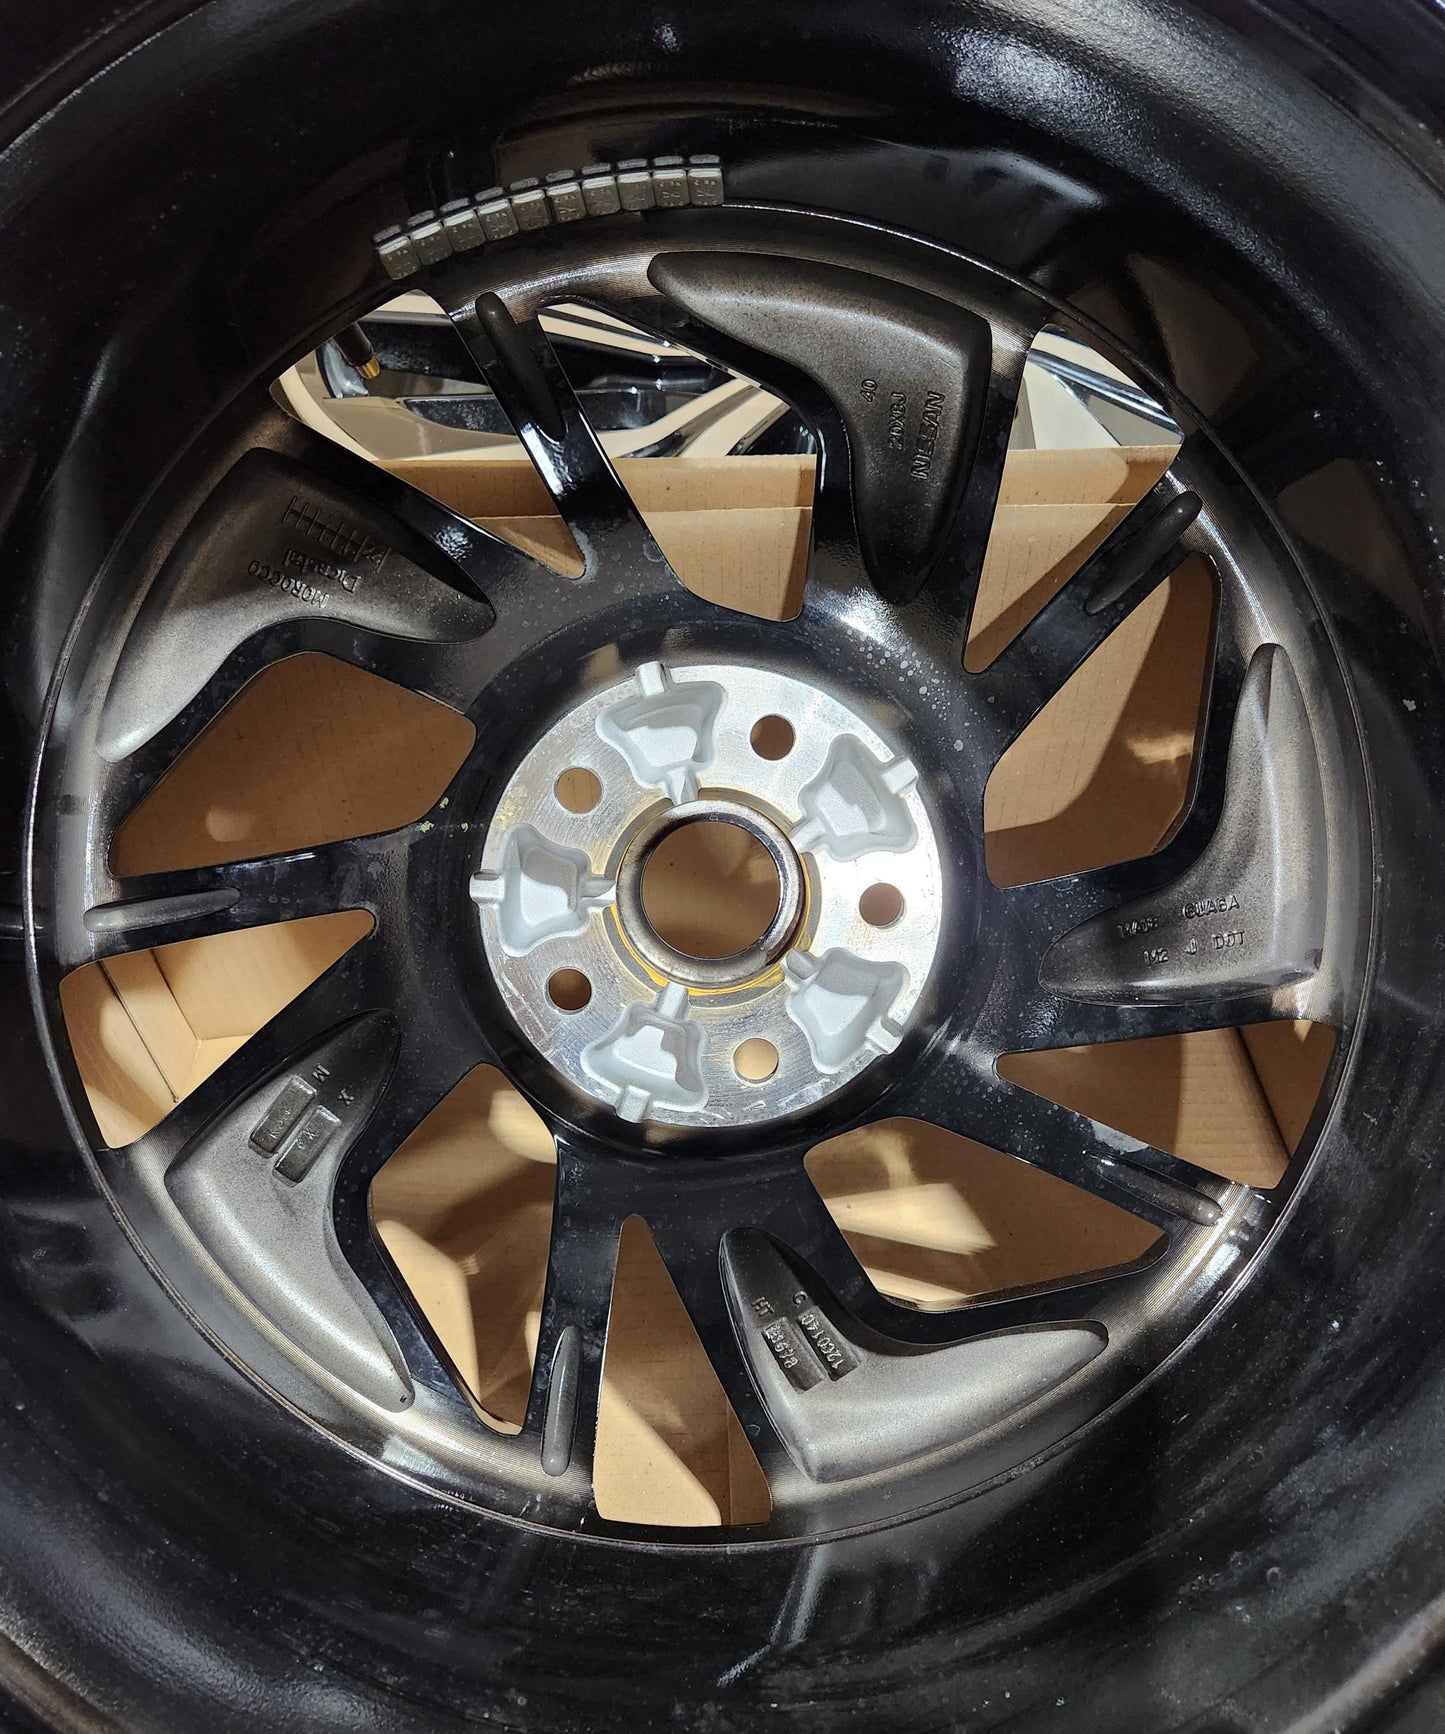 Nissan Qashqai 20" Alloy Wheels Diamond Cut and Gloss Black set of 4 6UA6A